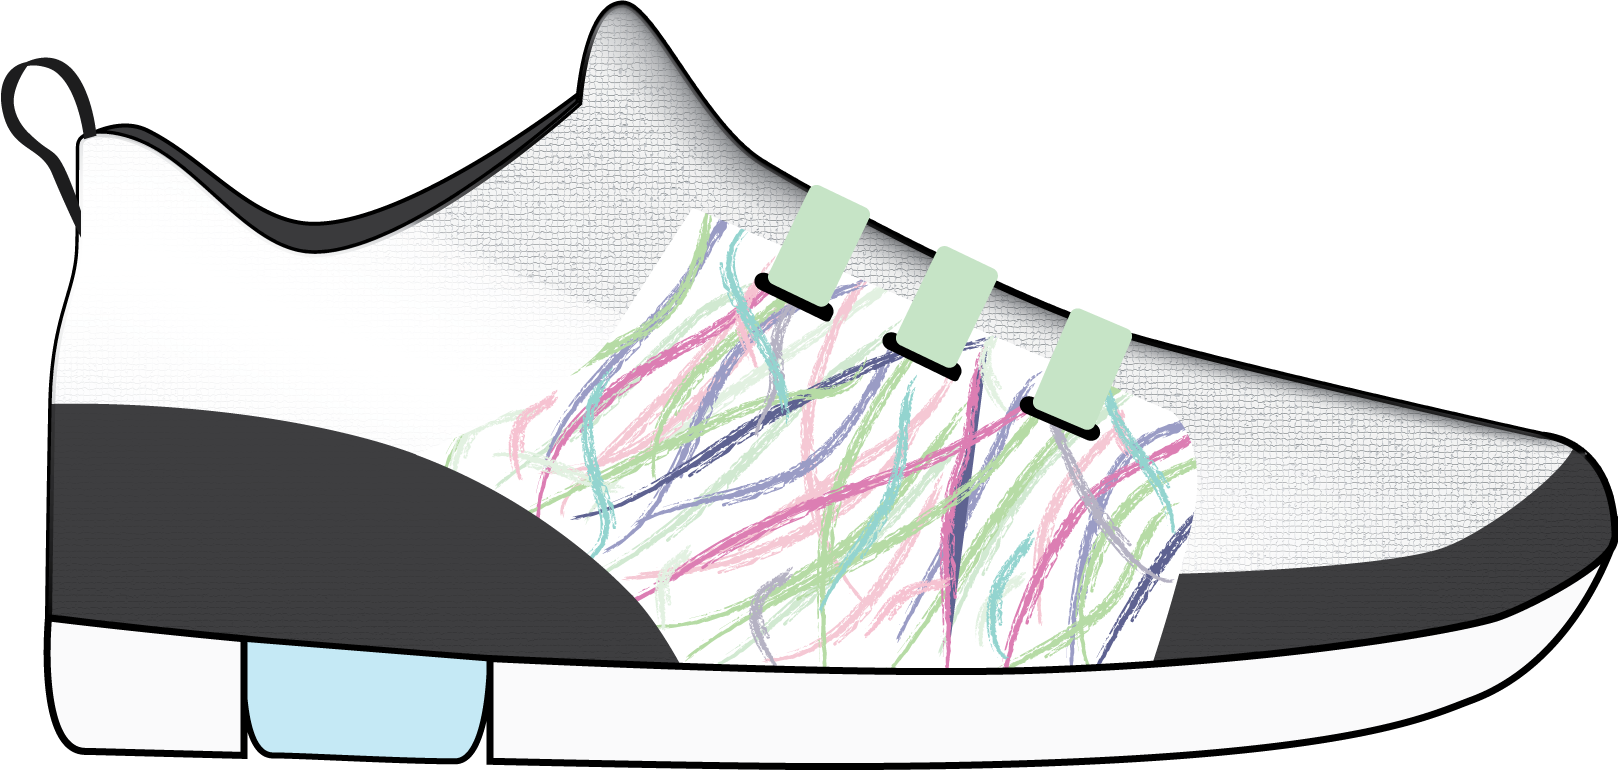 Next - Sneakers (1618x770)